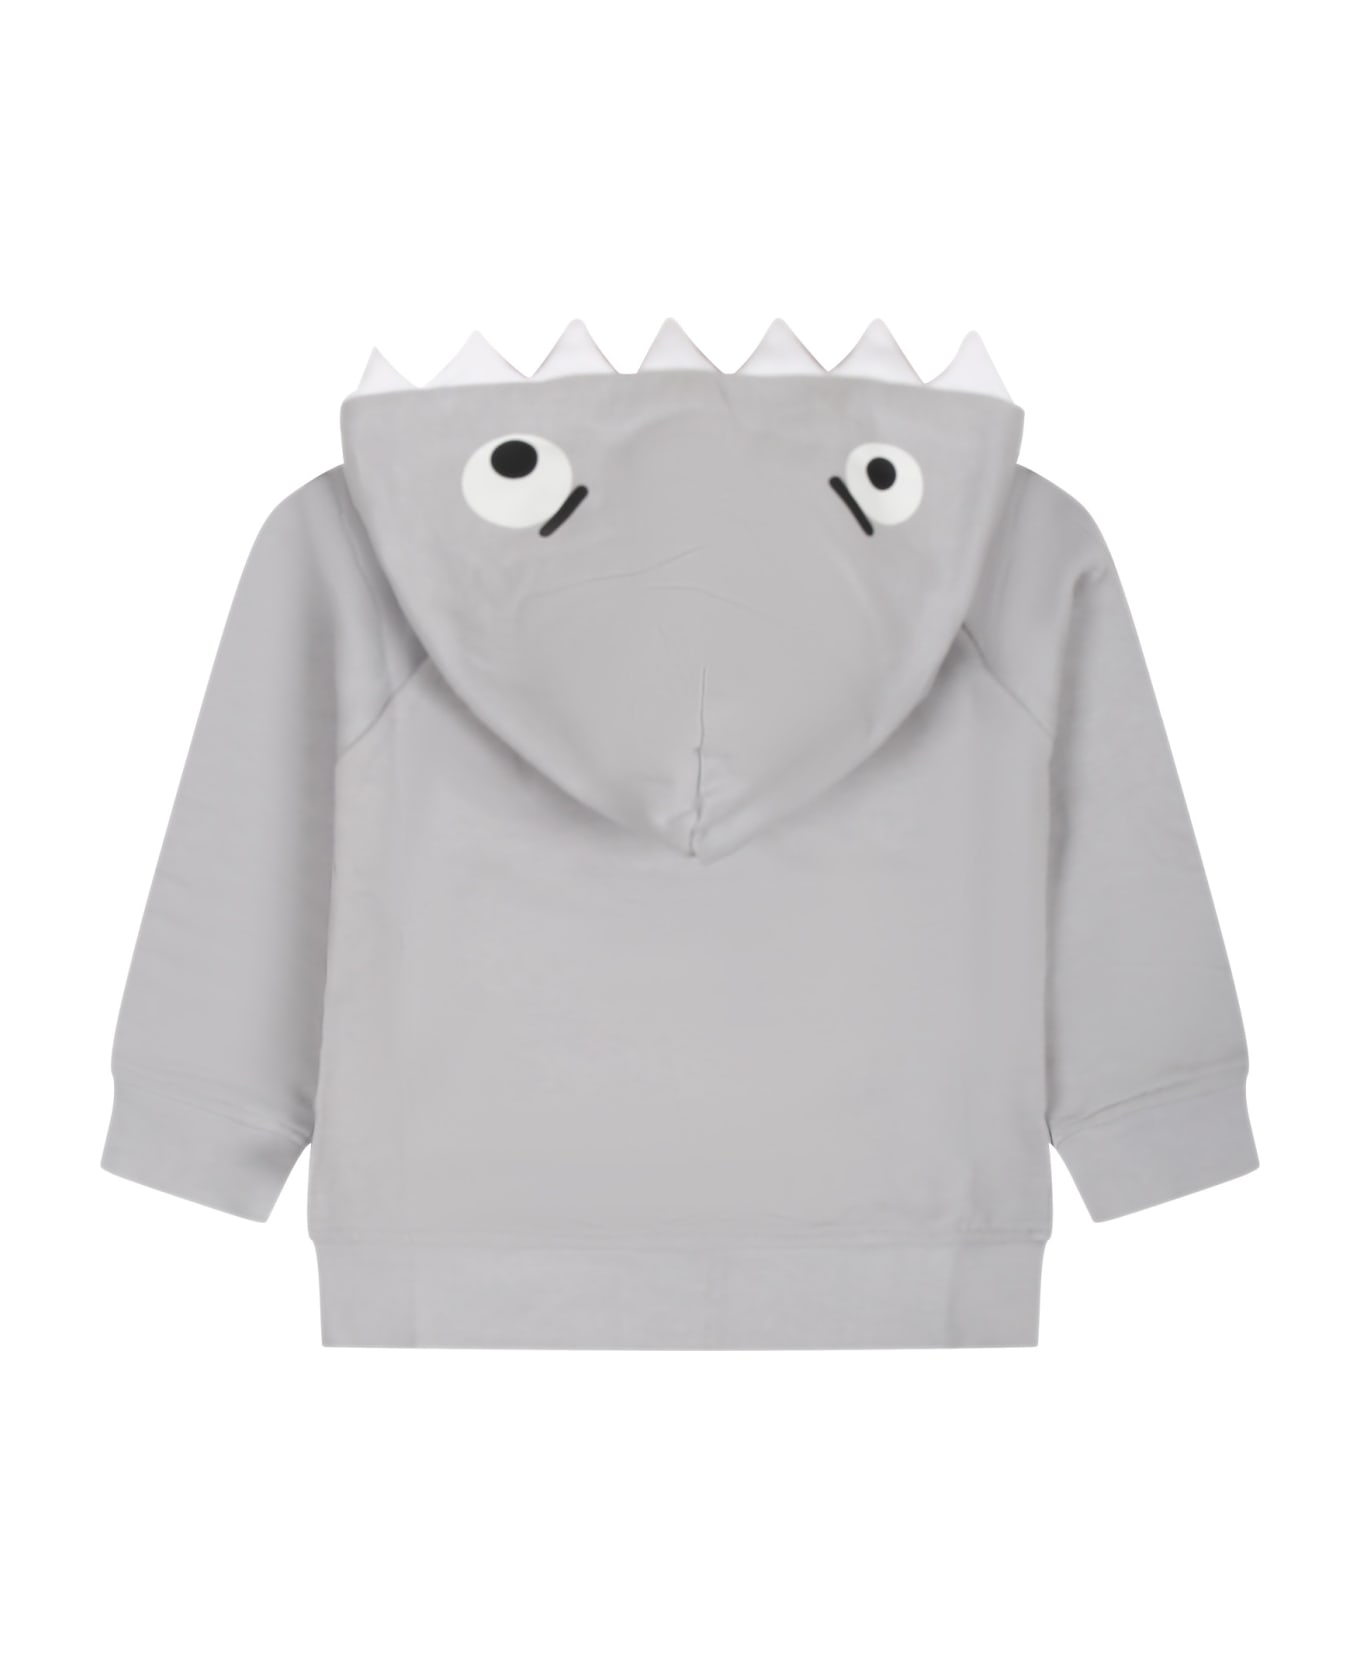 Stella McCartney Kids Gray Sweatshirt For Babies With Print - Grey